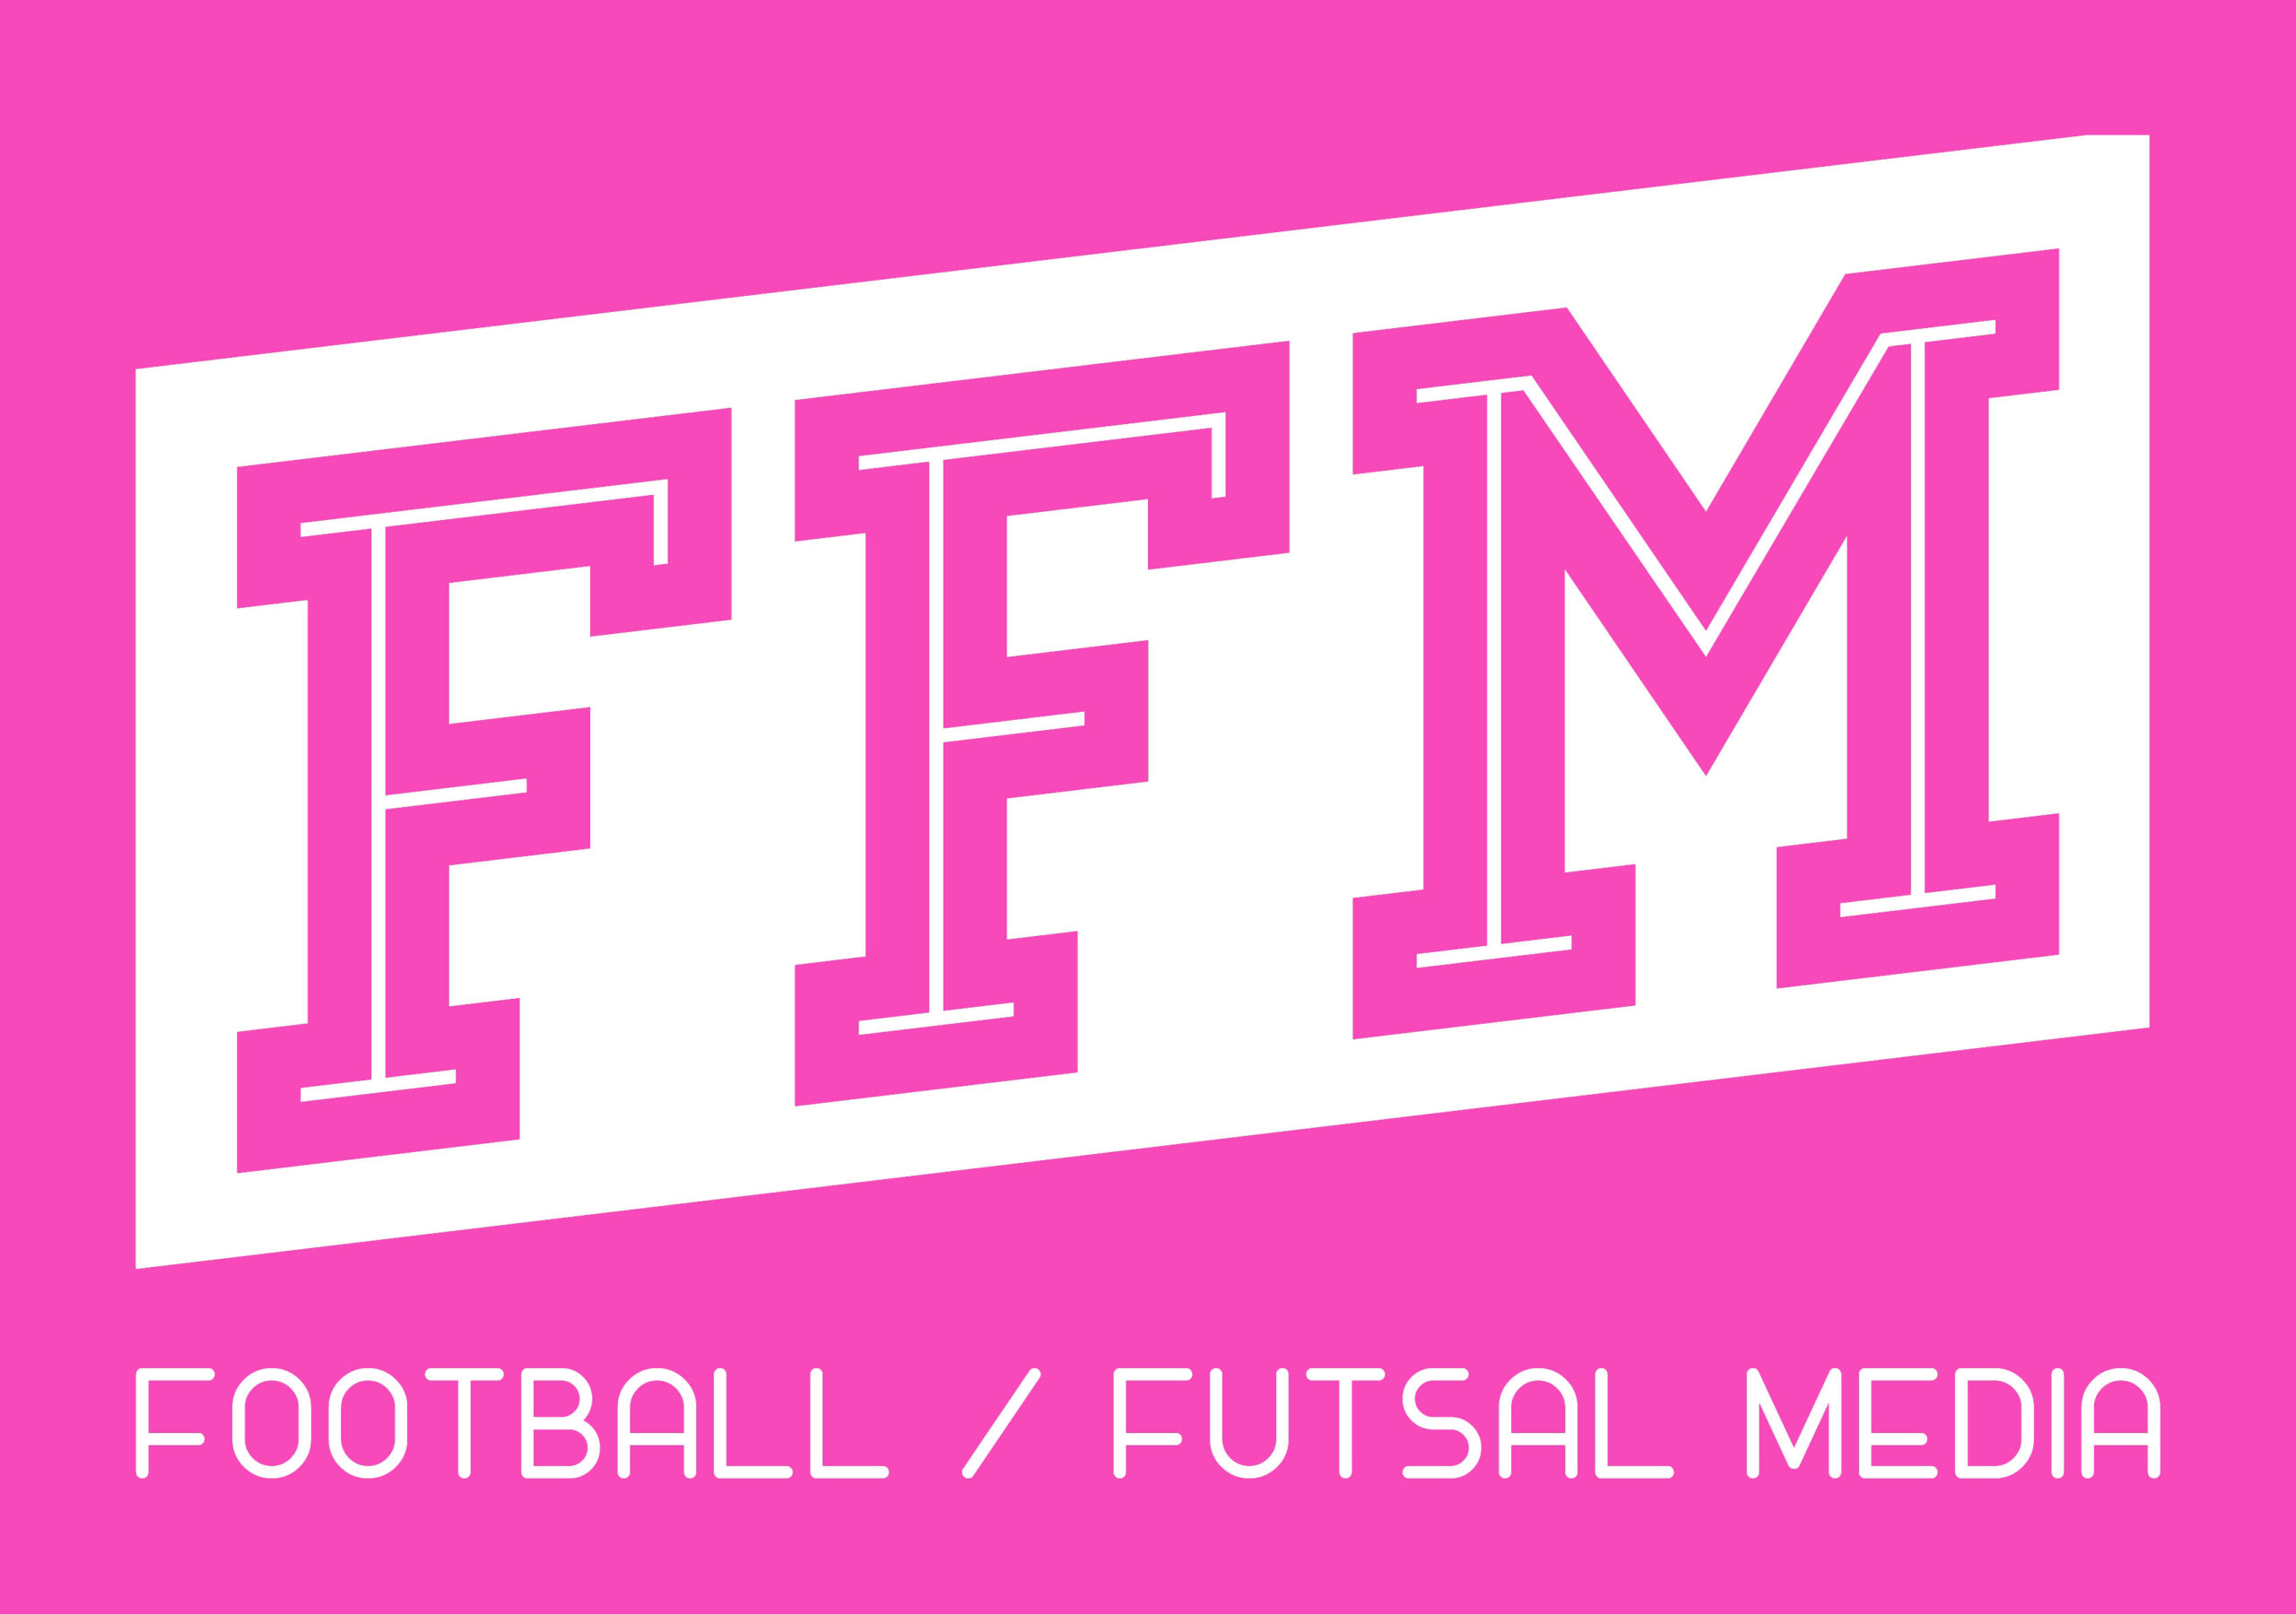 FFM - Football / Futsal Media